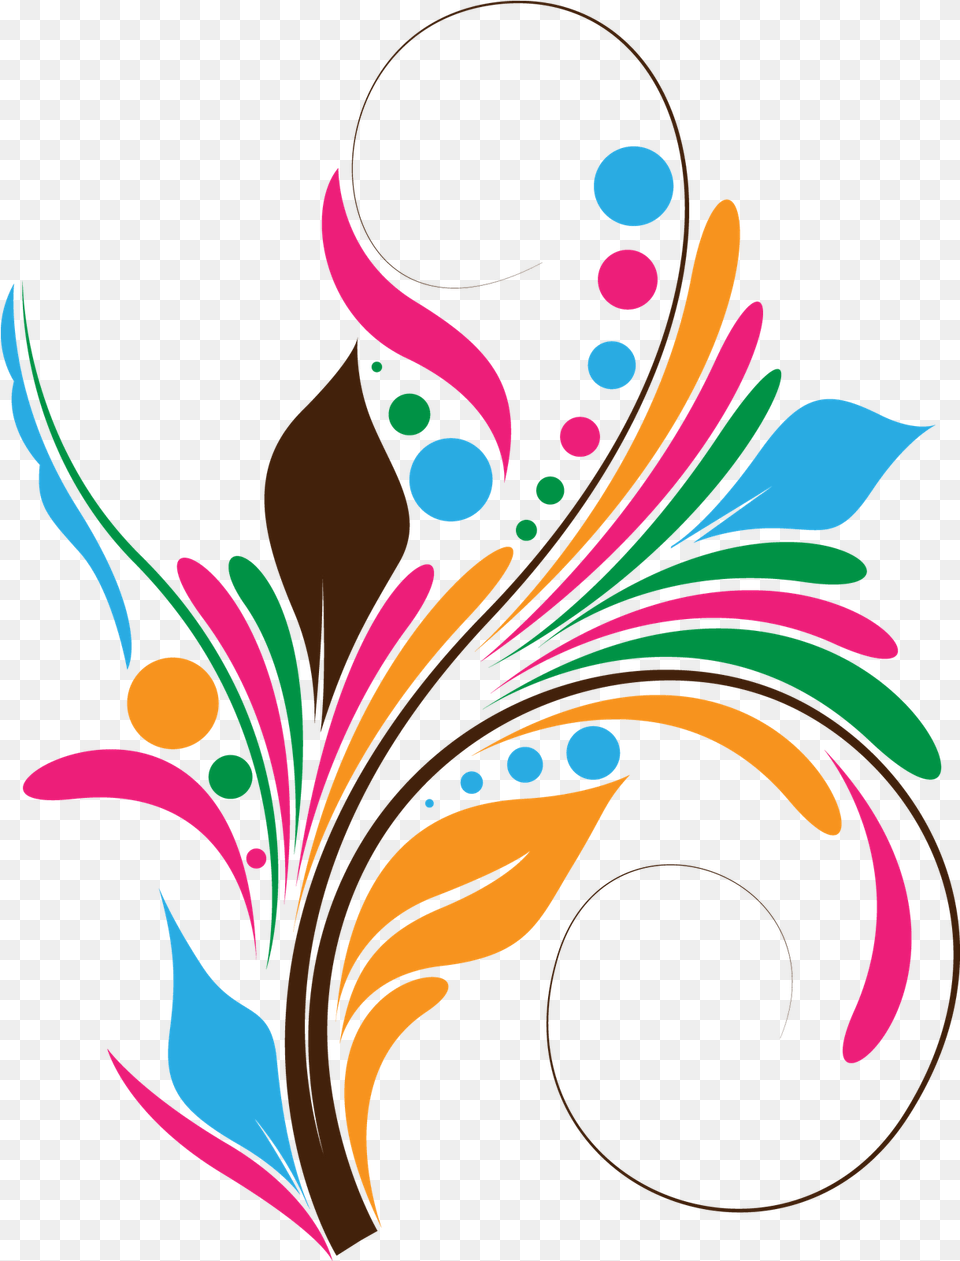 Colorful Floral Design Flower Corel Draw Designs, Art, Floral Design, Graphics, Pattern Free Transparent Png